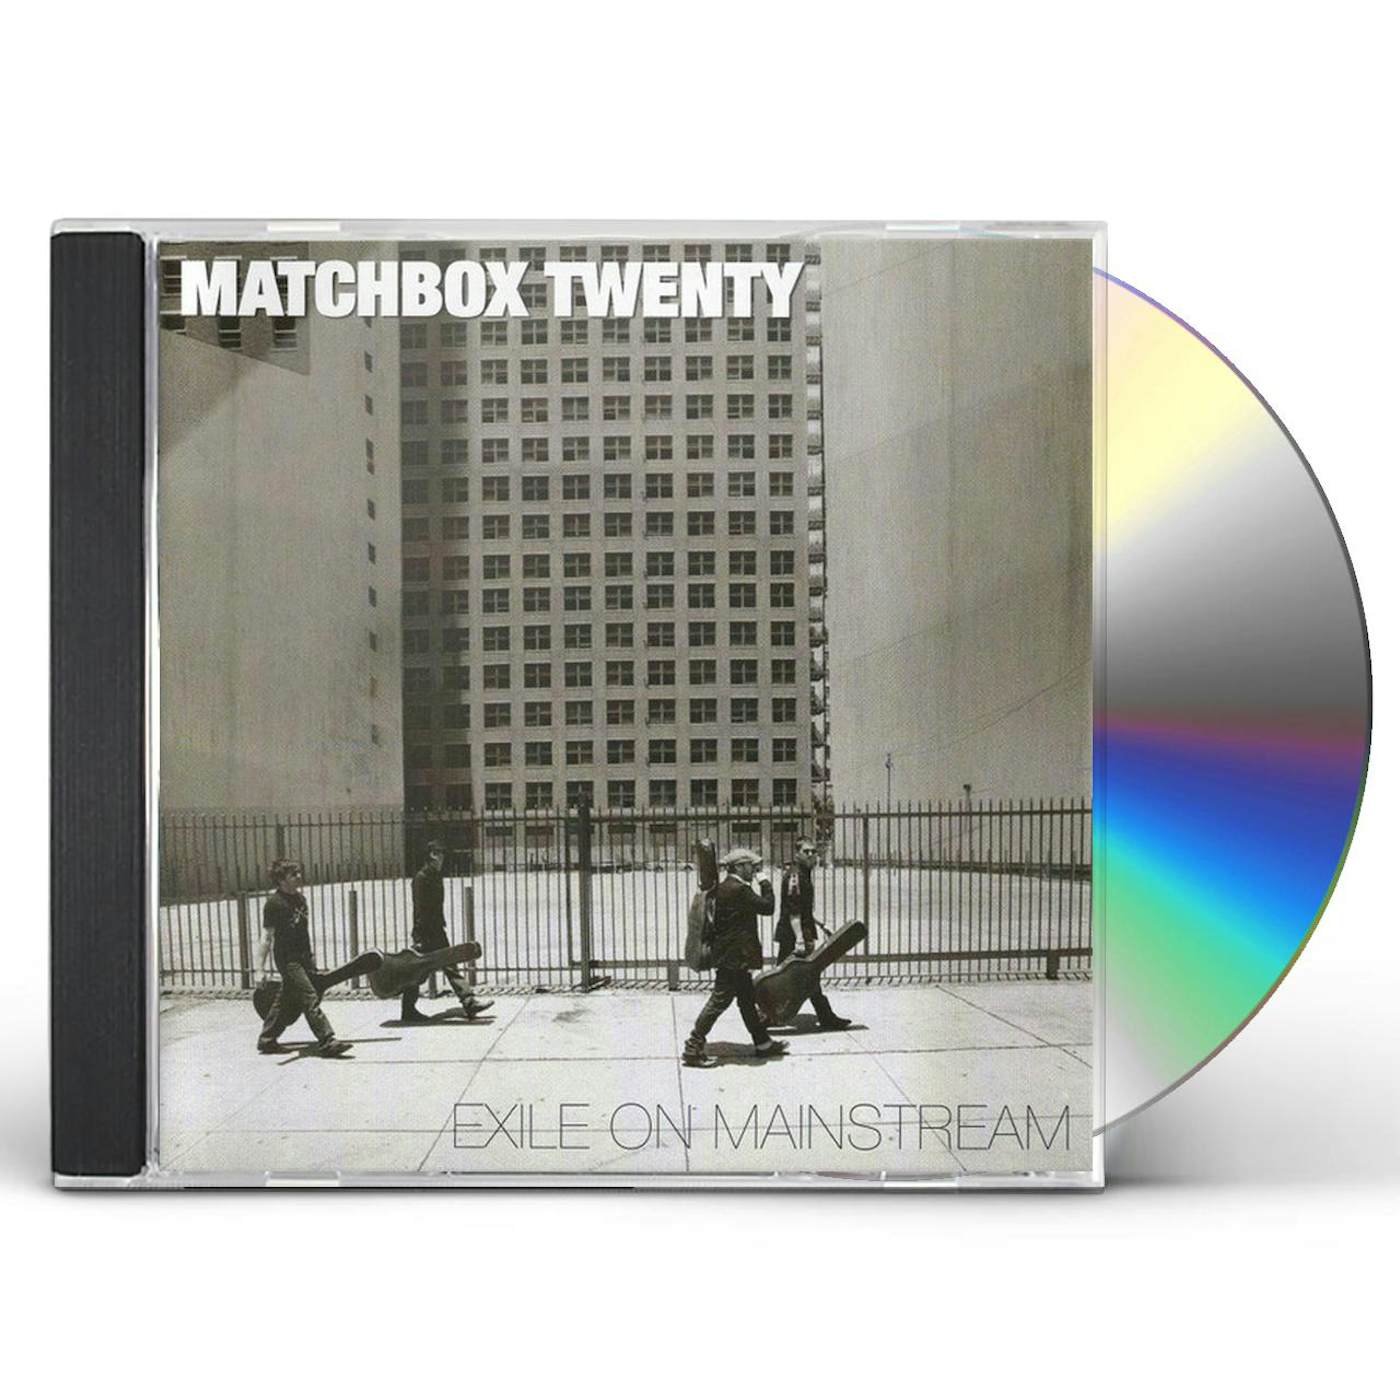 Matchbox 20 EXILE ON MAINSTREAM CD